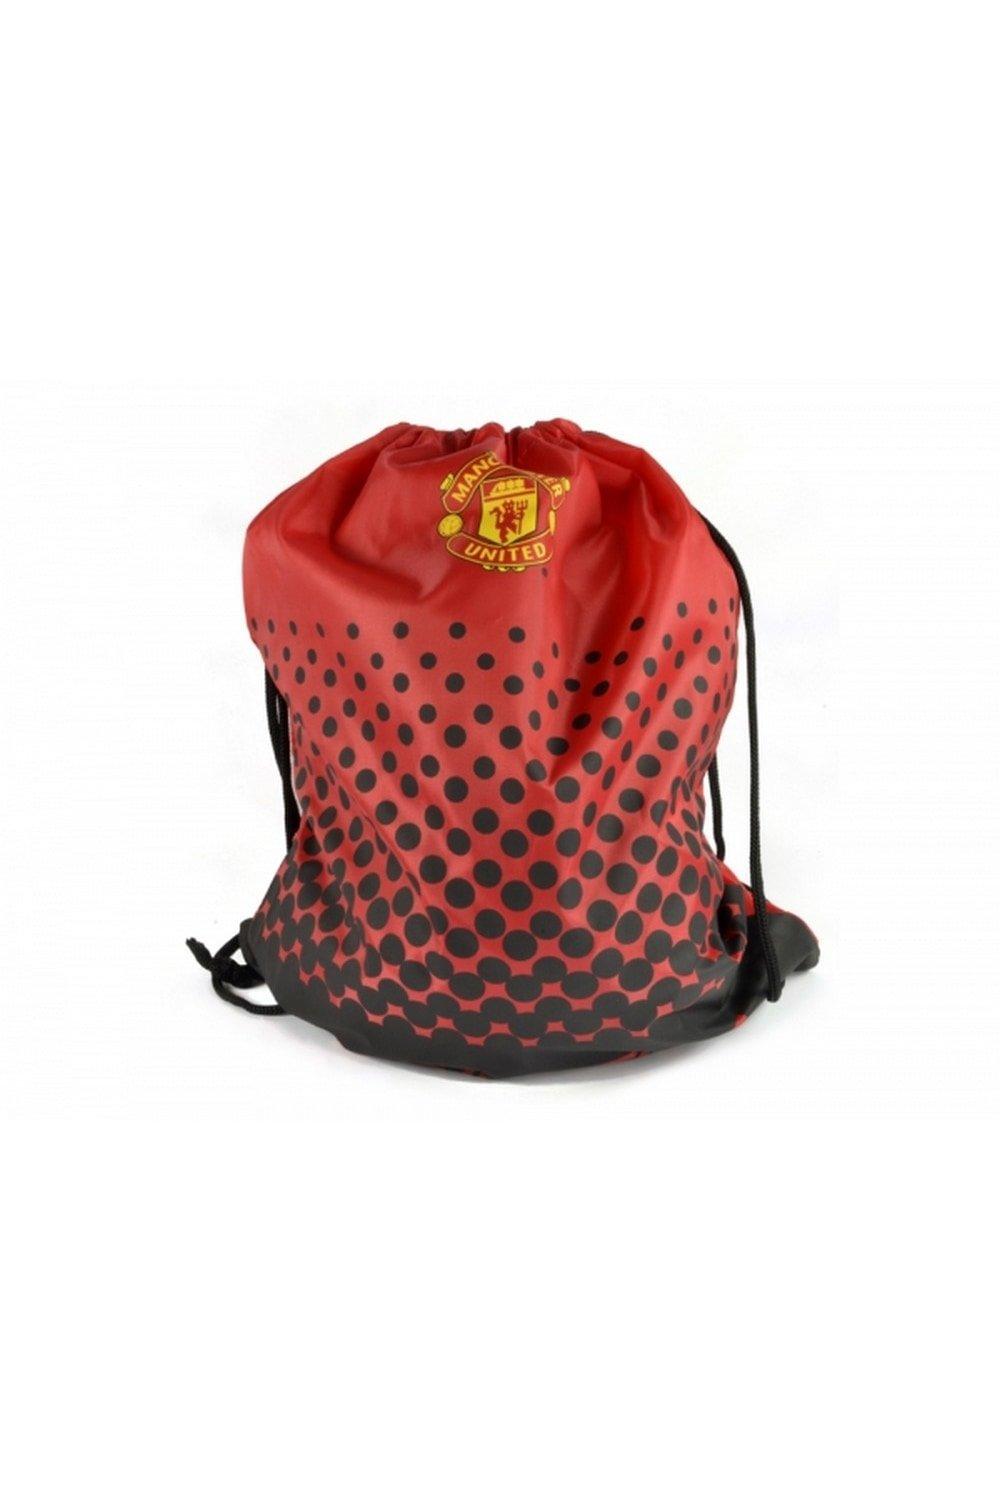 Спортивная сумка Манчестер Юнайтед Manchester United FC, красный сумки на шнурке спортивная сумка американский флаг графический рюкзак рюкзак забавная новинка